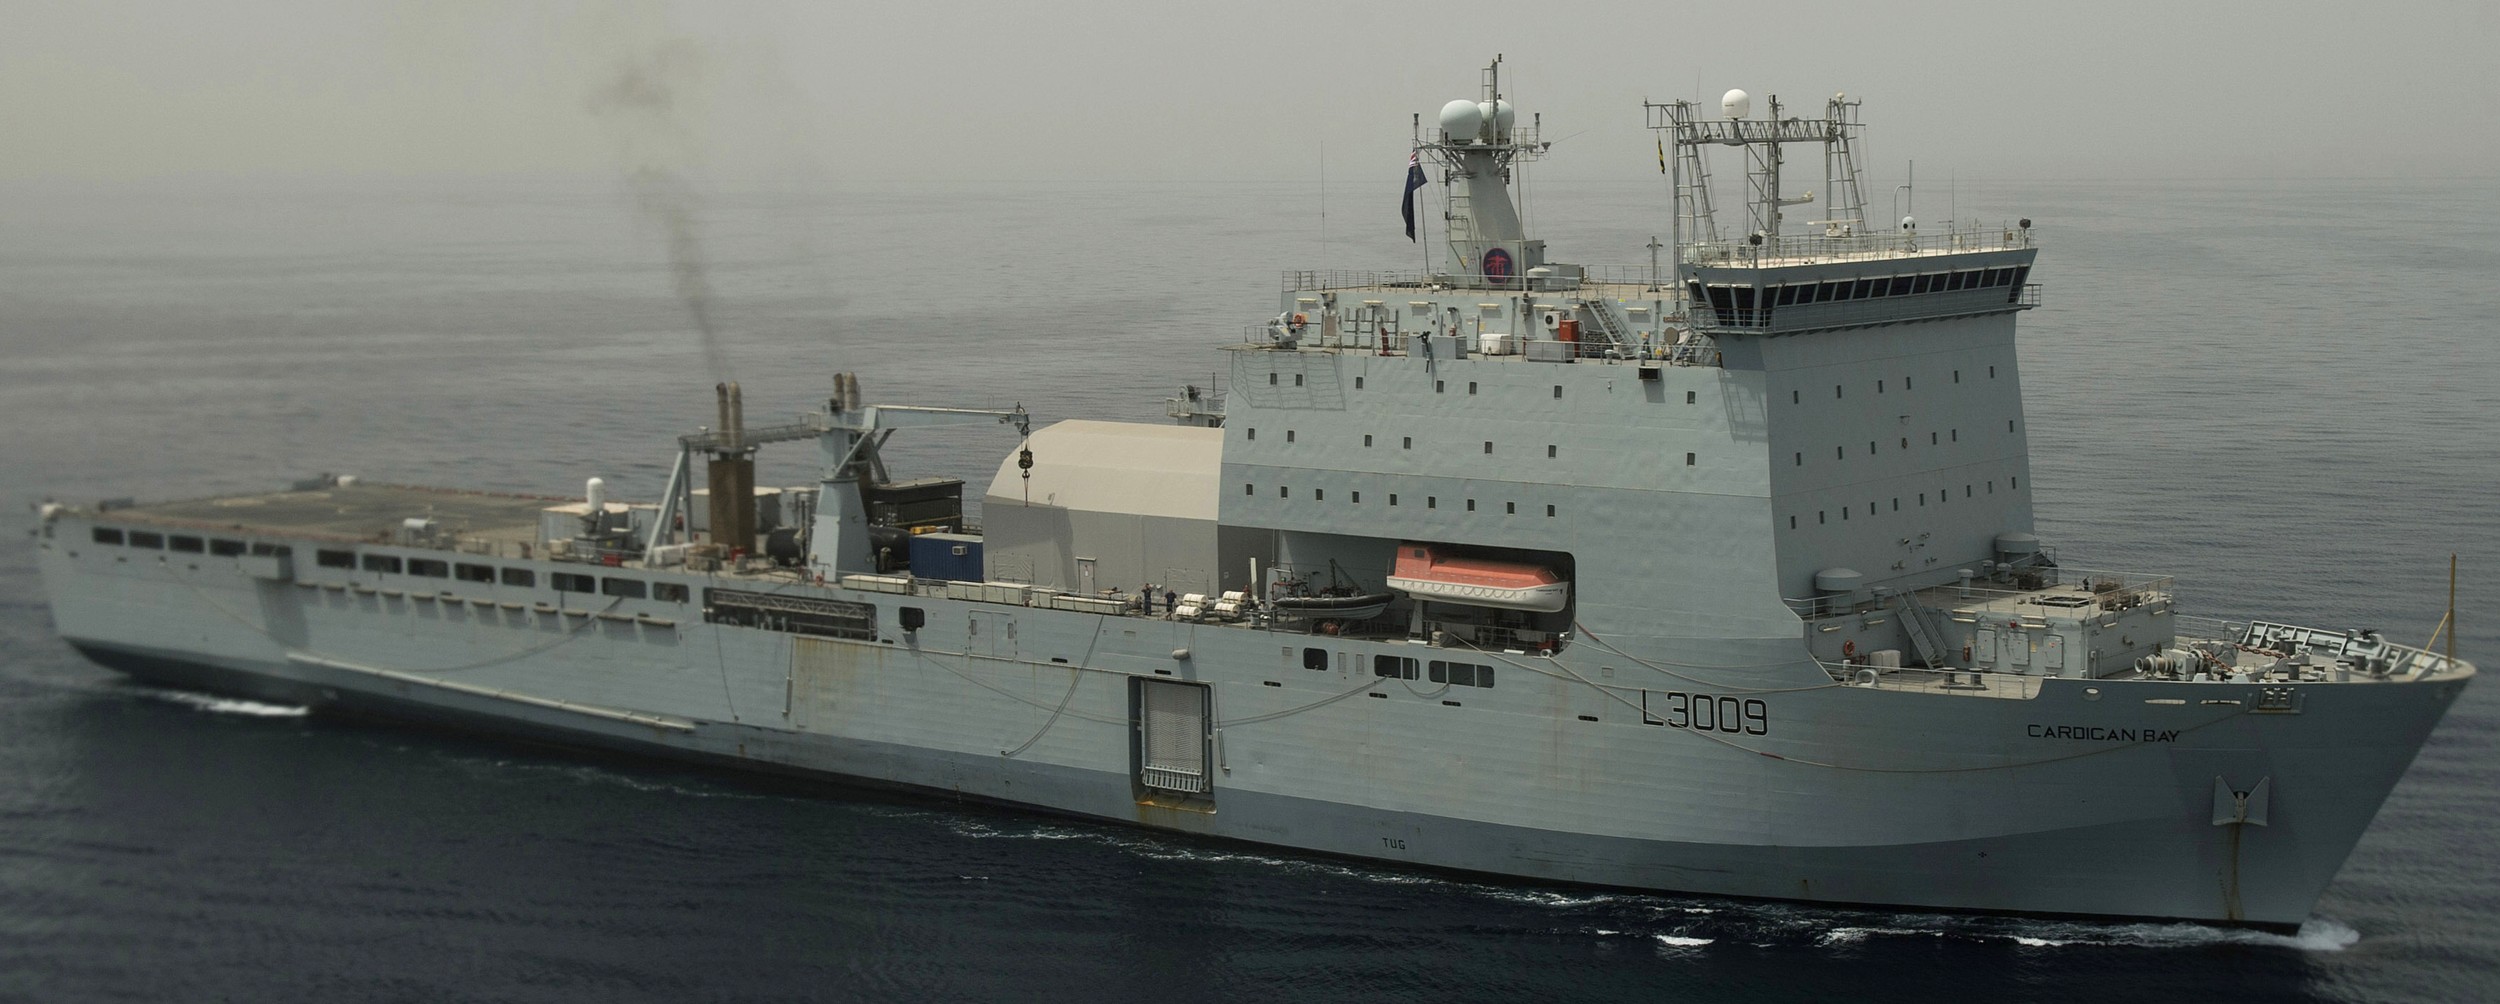 l-3009 rfa cardigan bay class dock landing ship lsd royal navy fleet auxilary 10